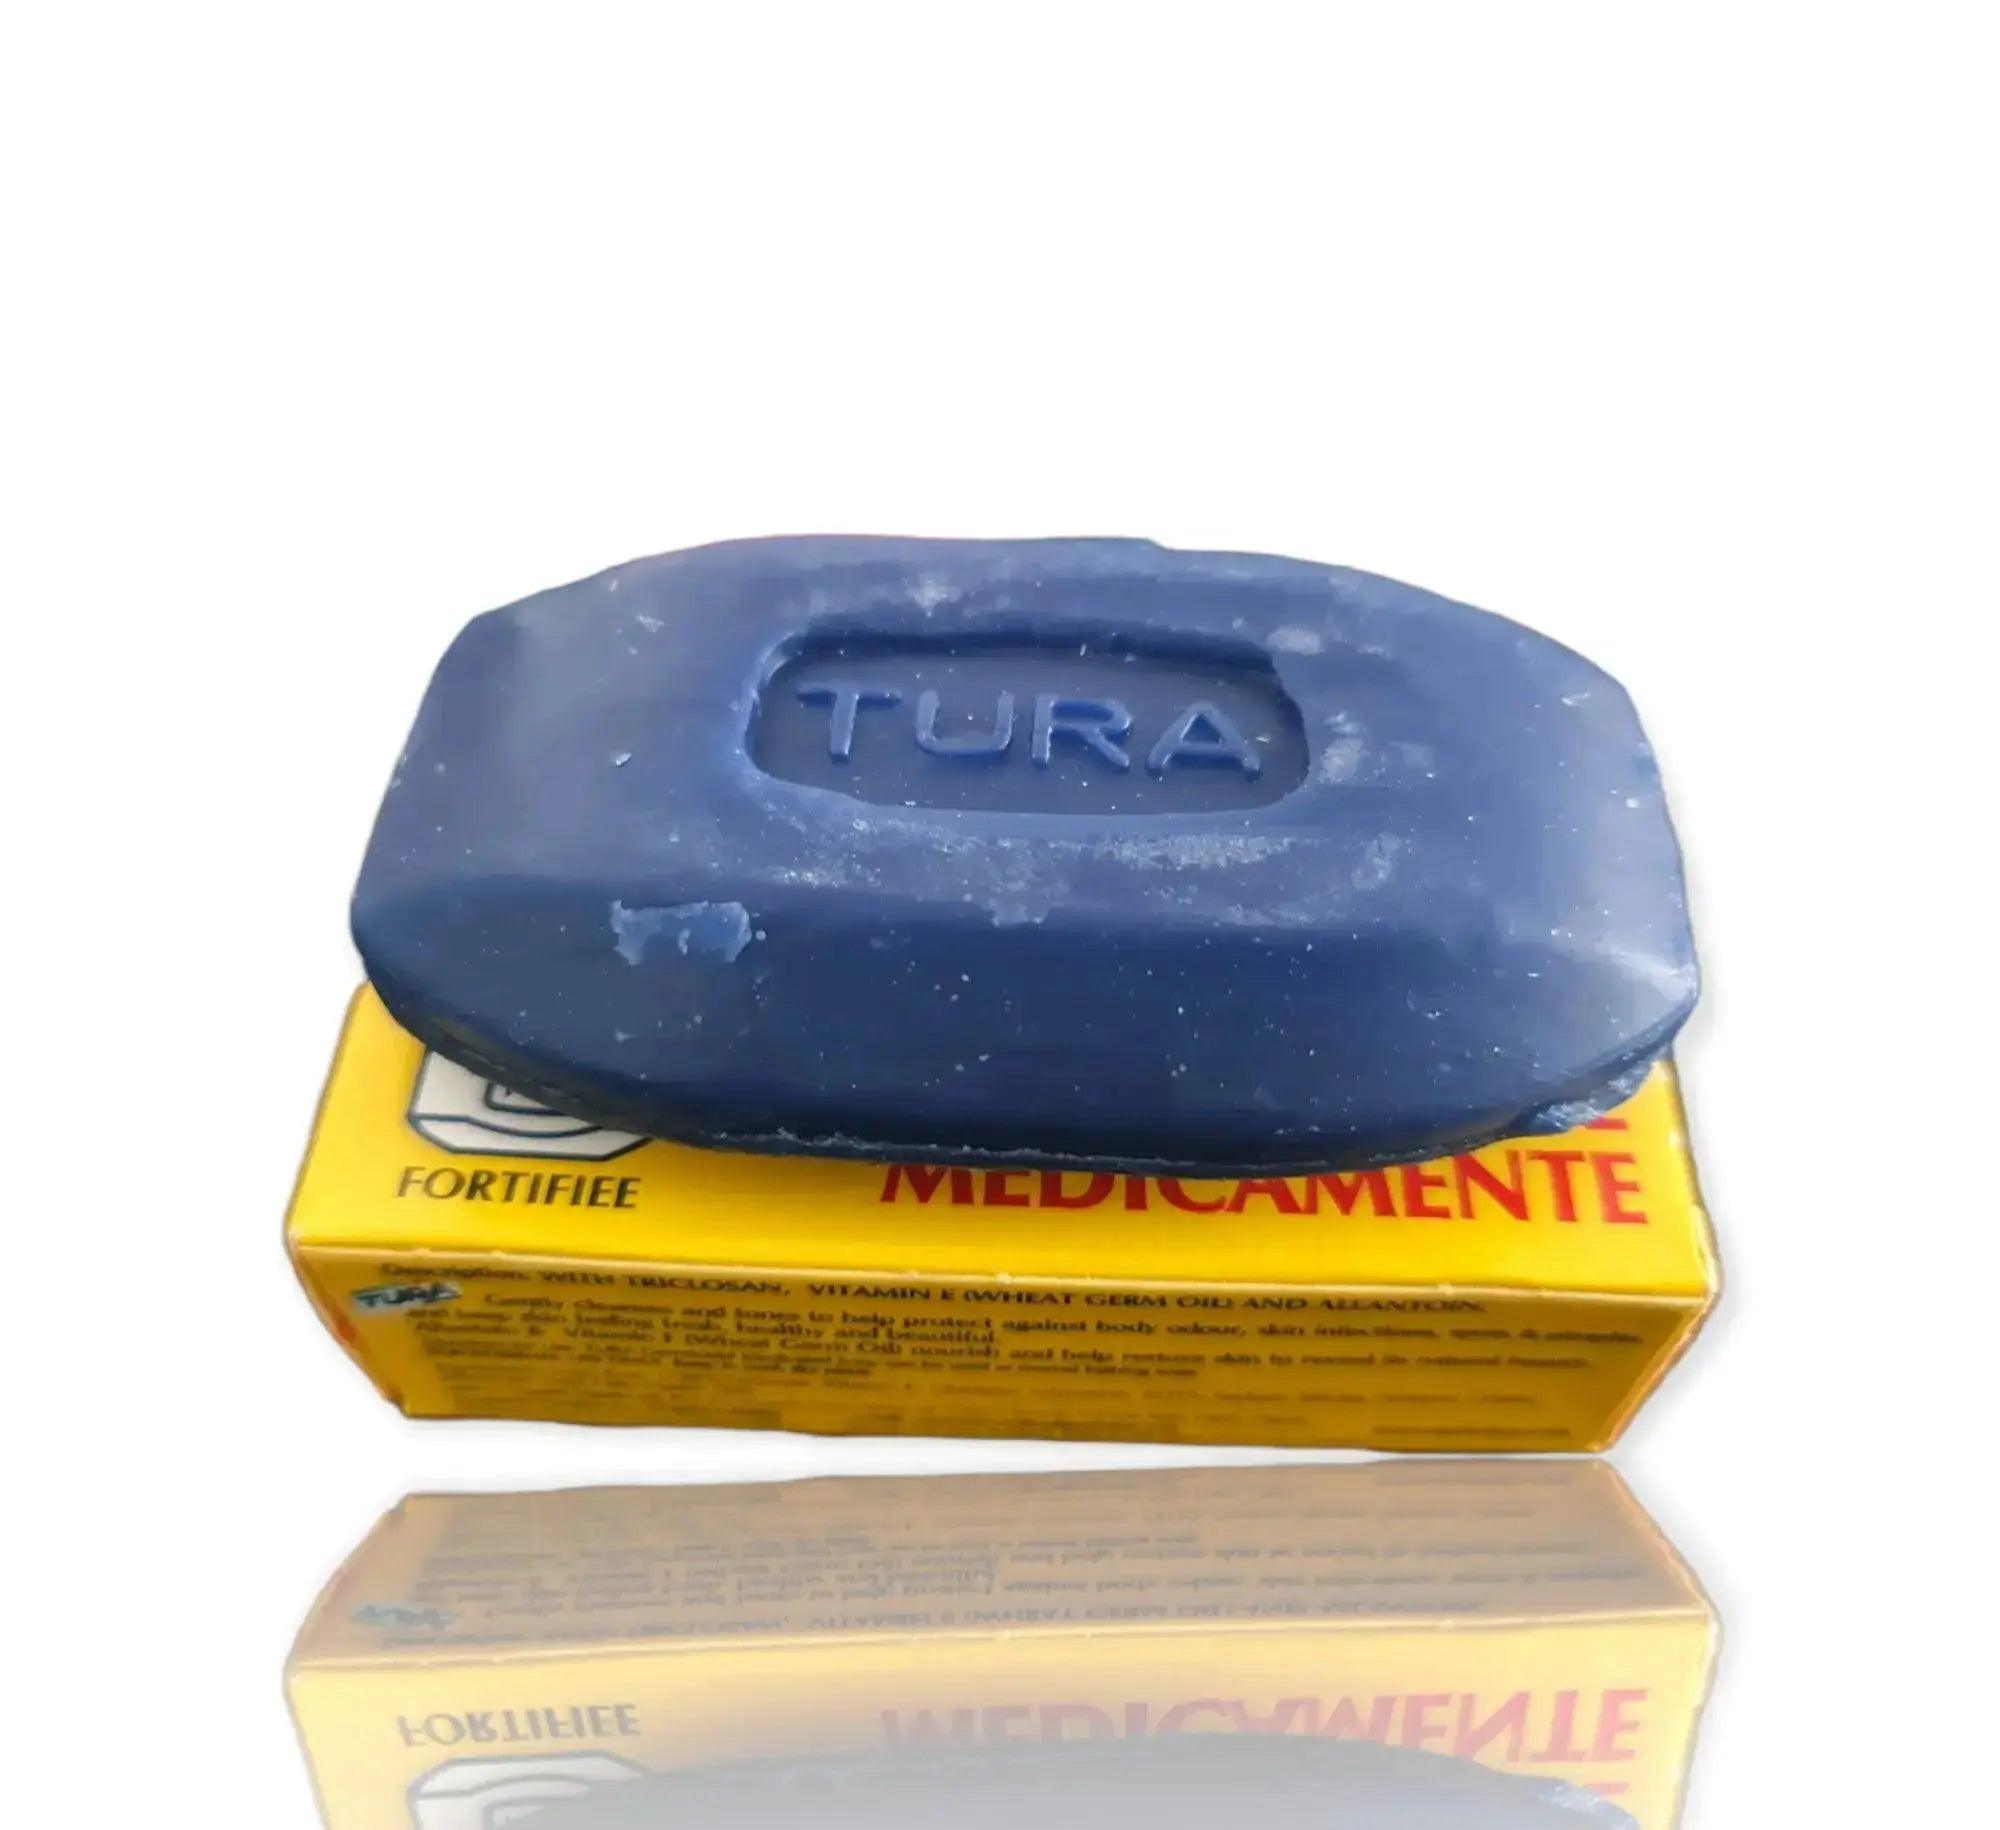 Germicidal Medicated Soap - Original Tura England Savon Germicidal Medicated Soap - Honesty Sales U.K